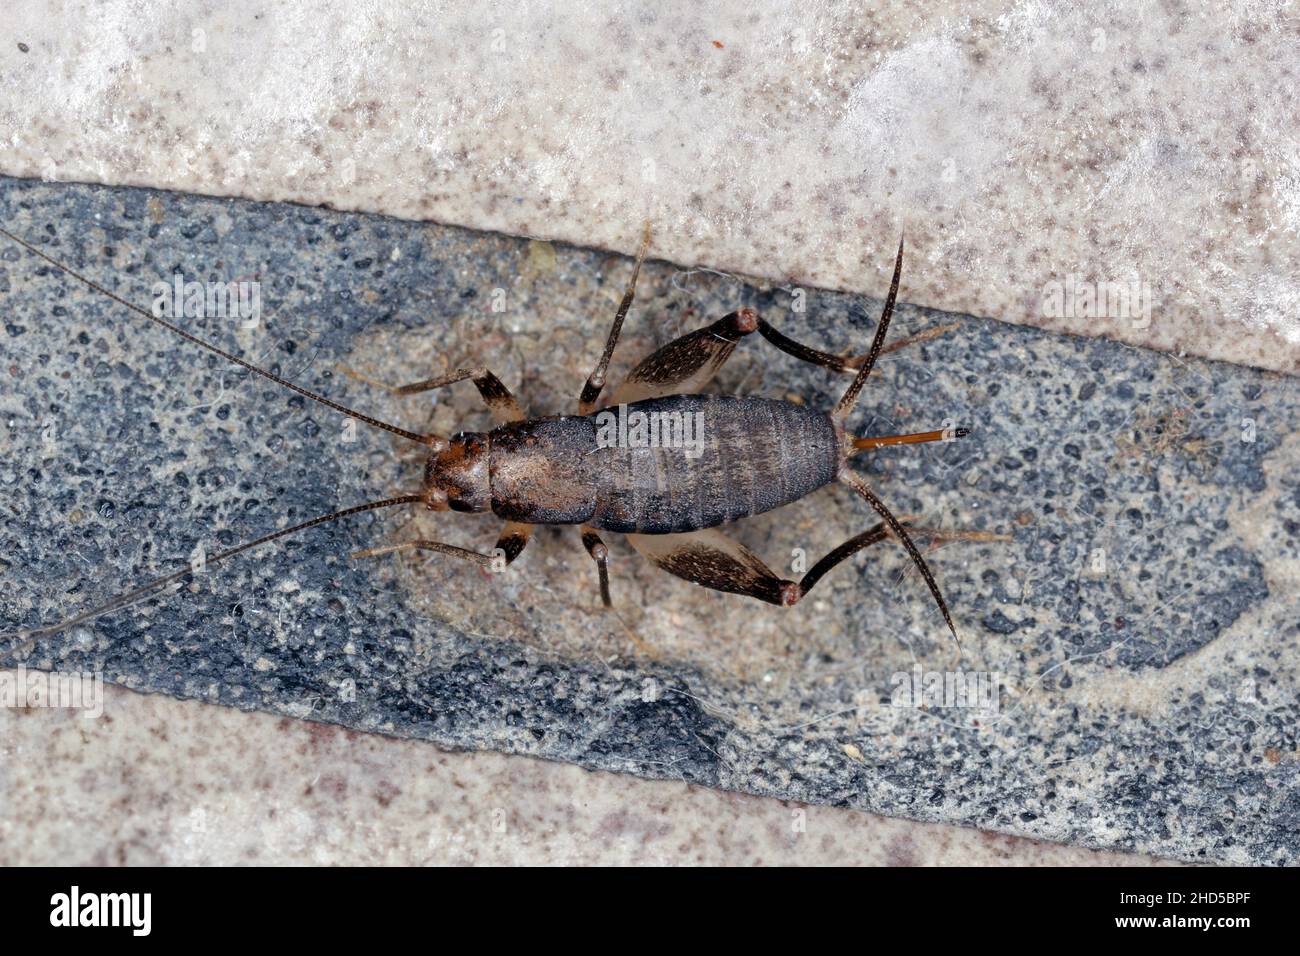 House cricket on a ceramic tile floor. Stock Photo